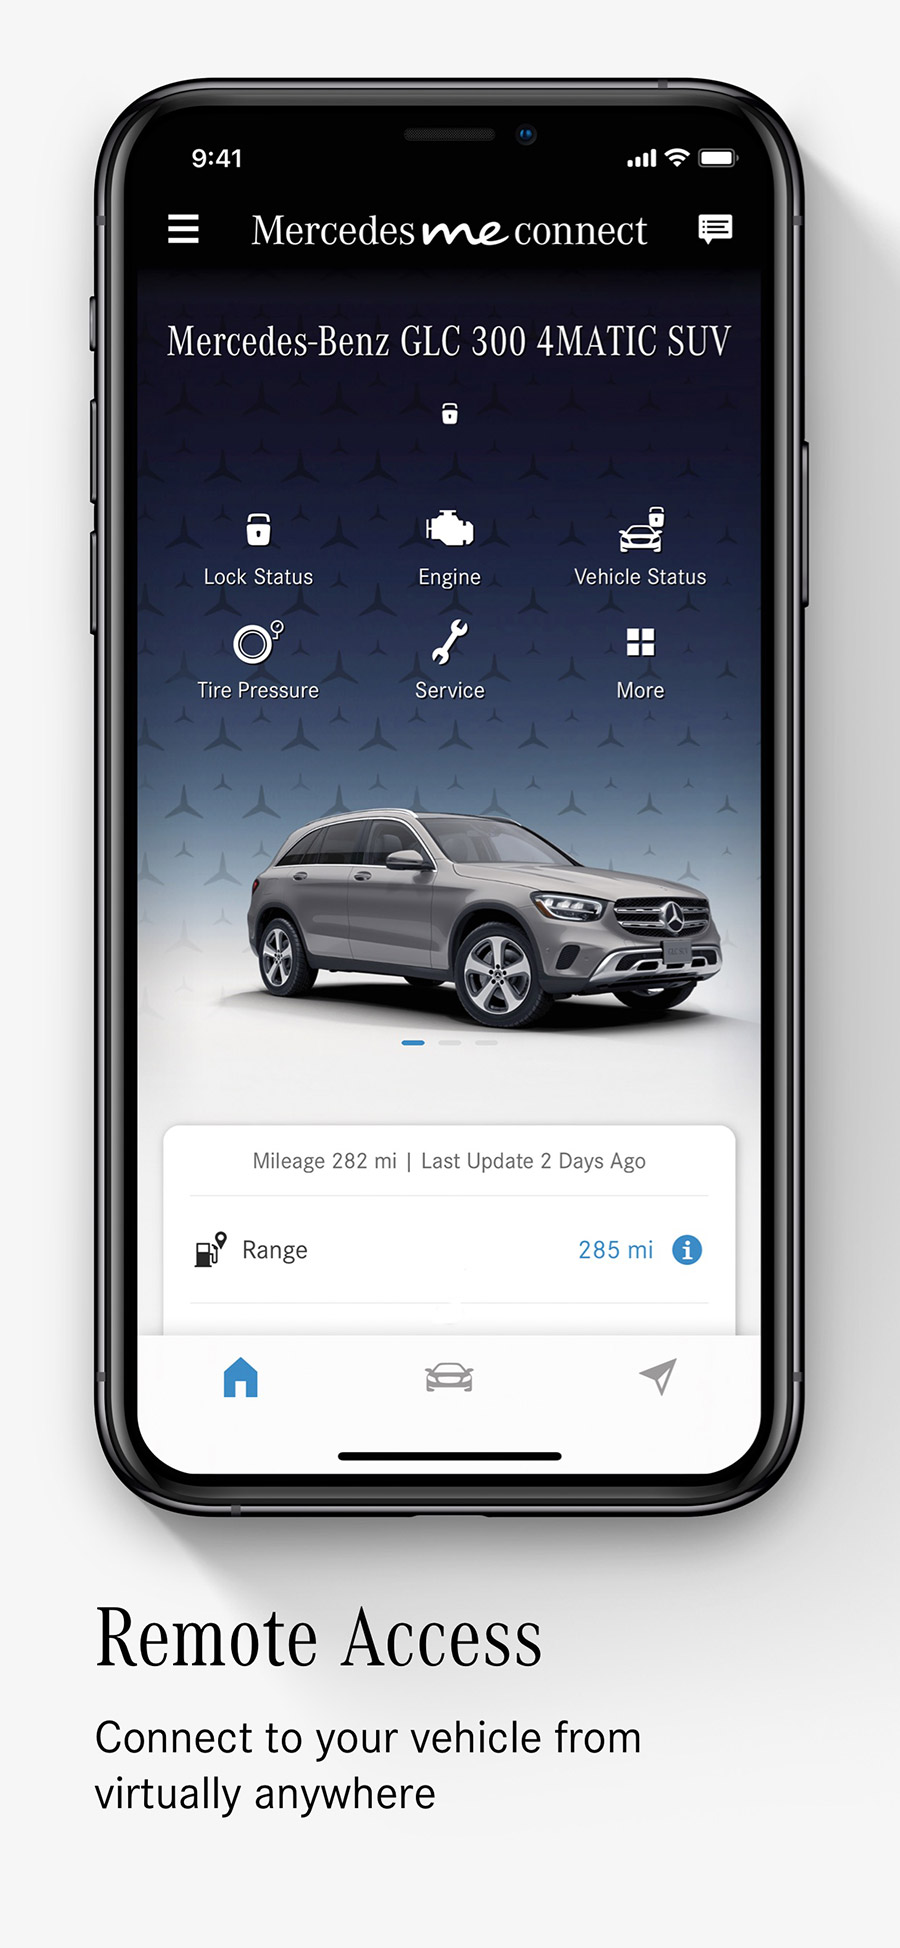 Mercedes-Benz USA Introduces Next-Generation Mercedes Me Connect App